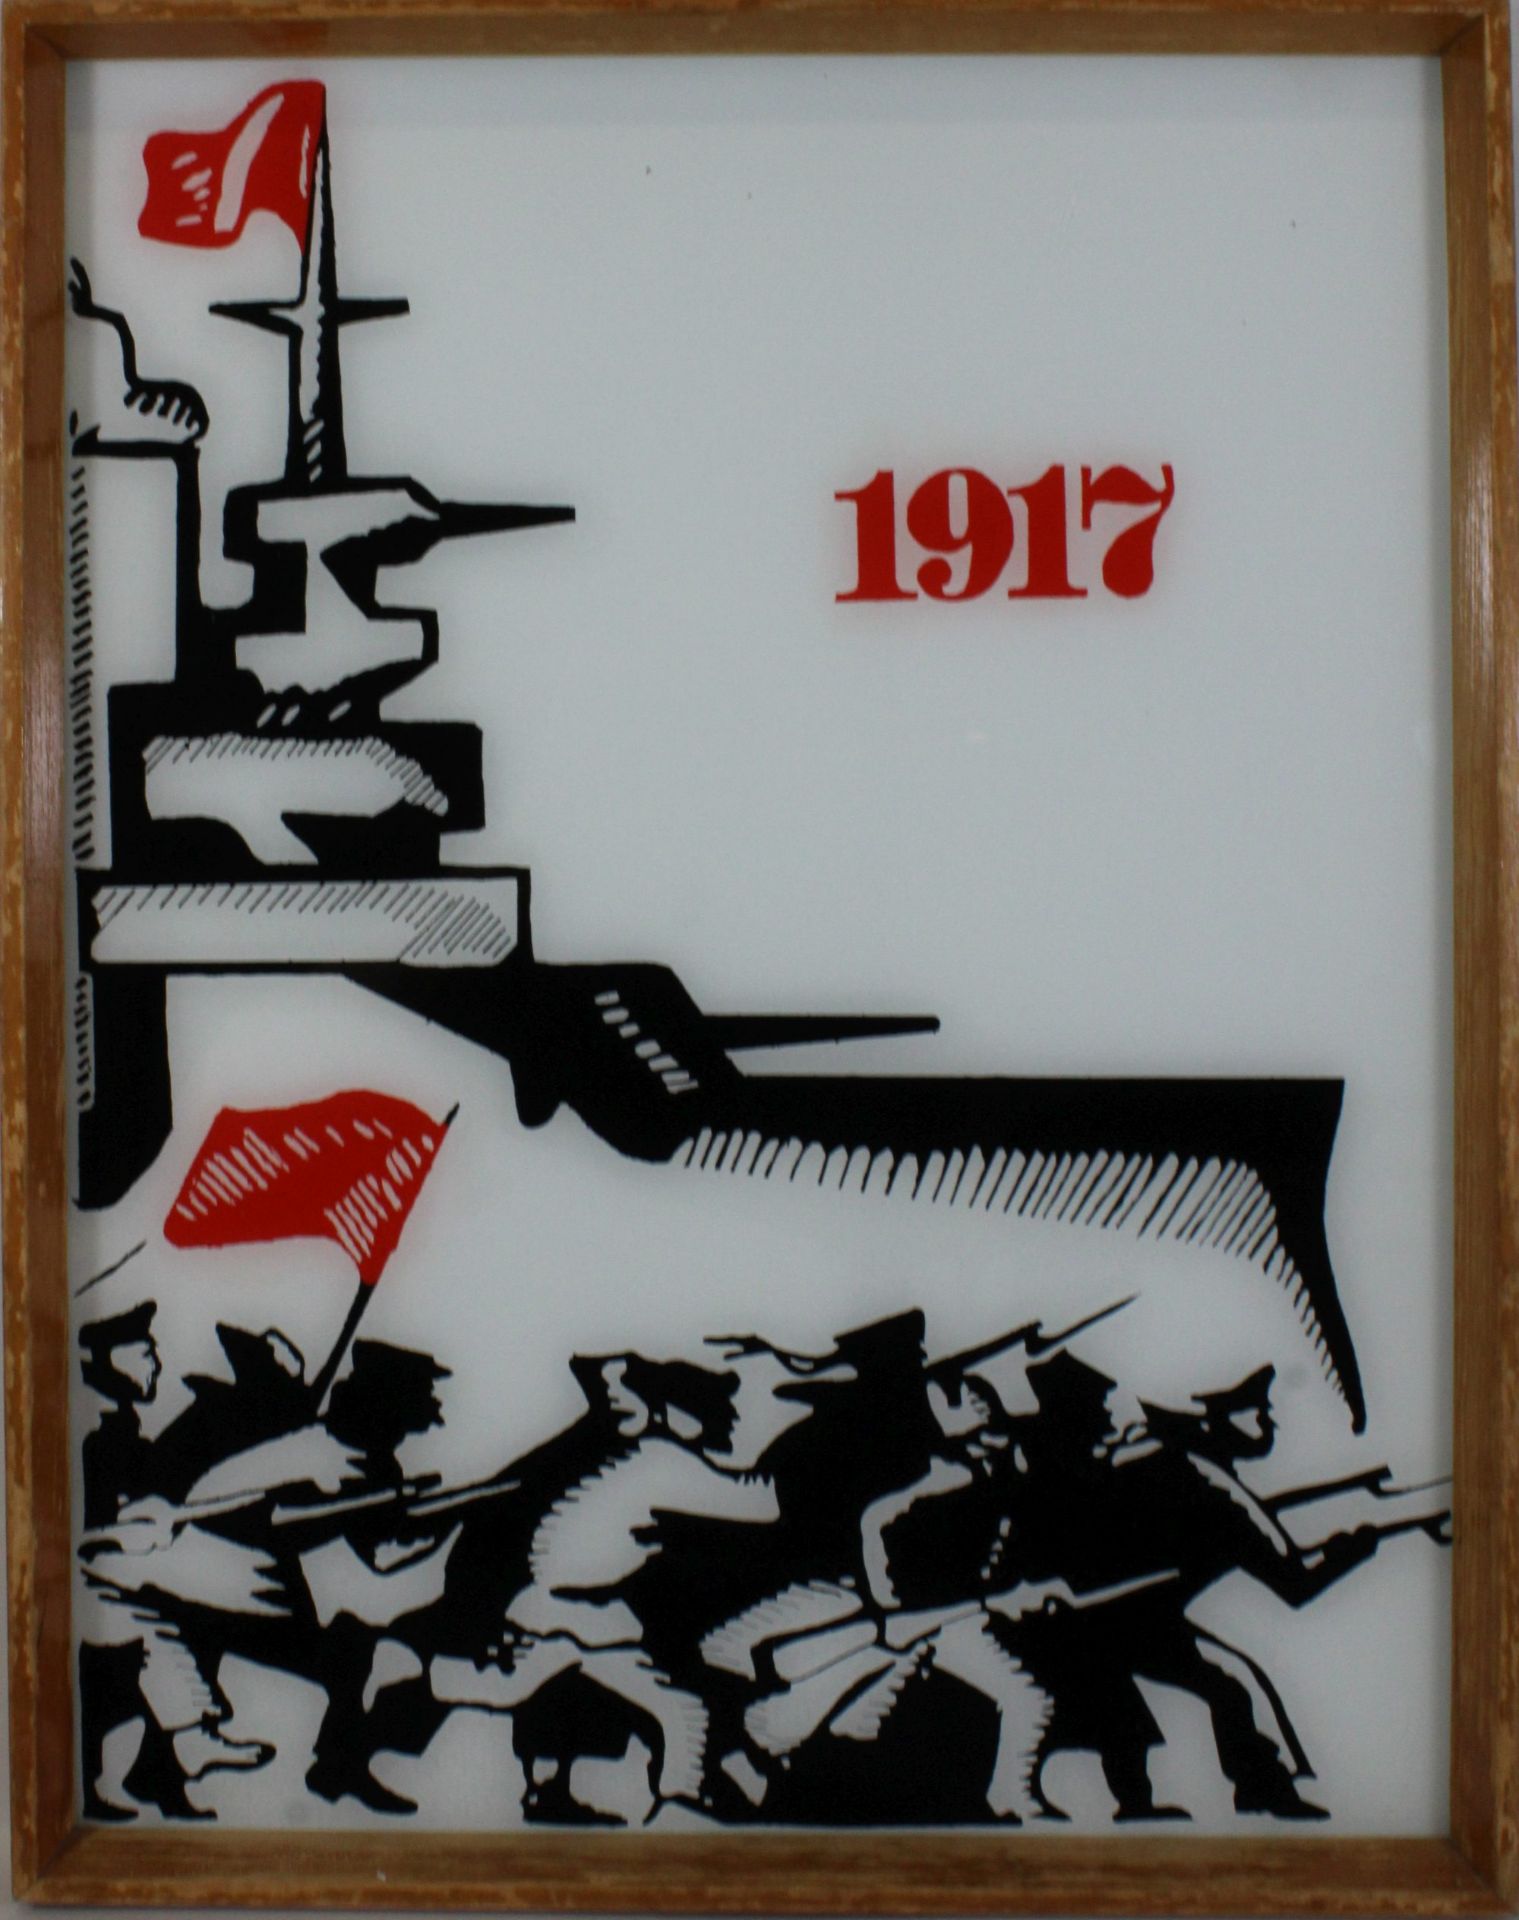 Hinterglasdruck, Oktoberrevolution 1917